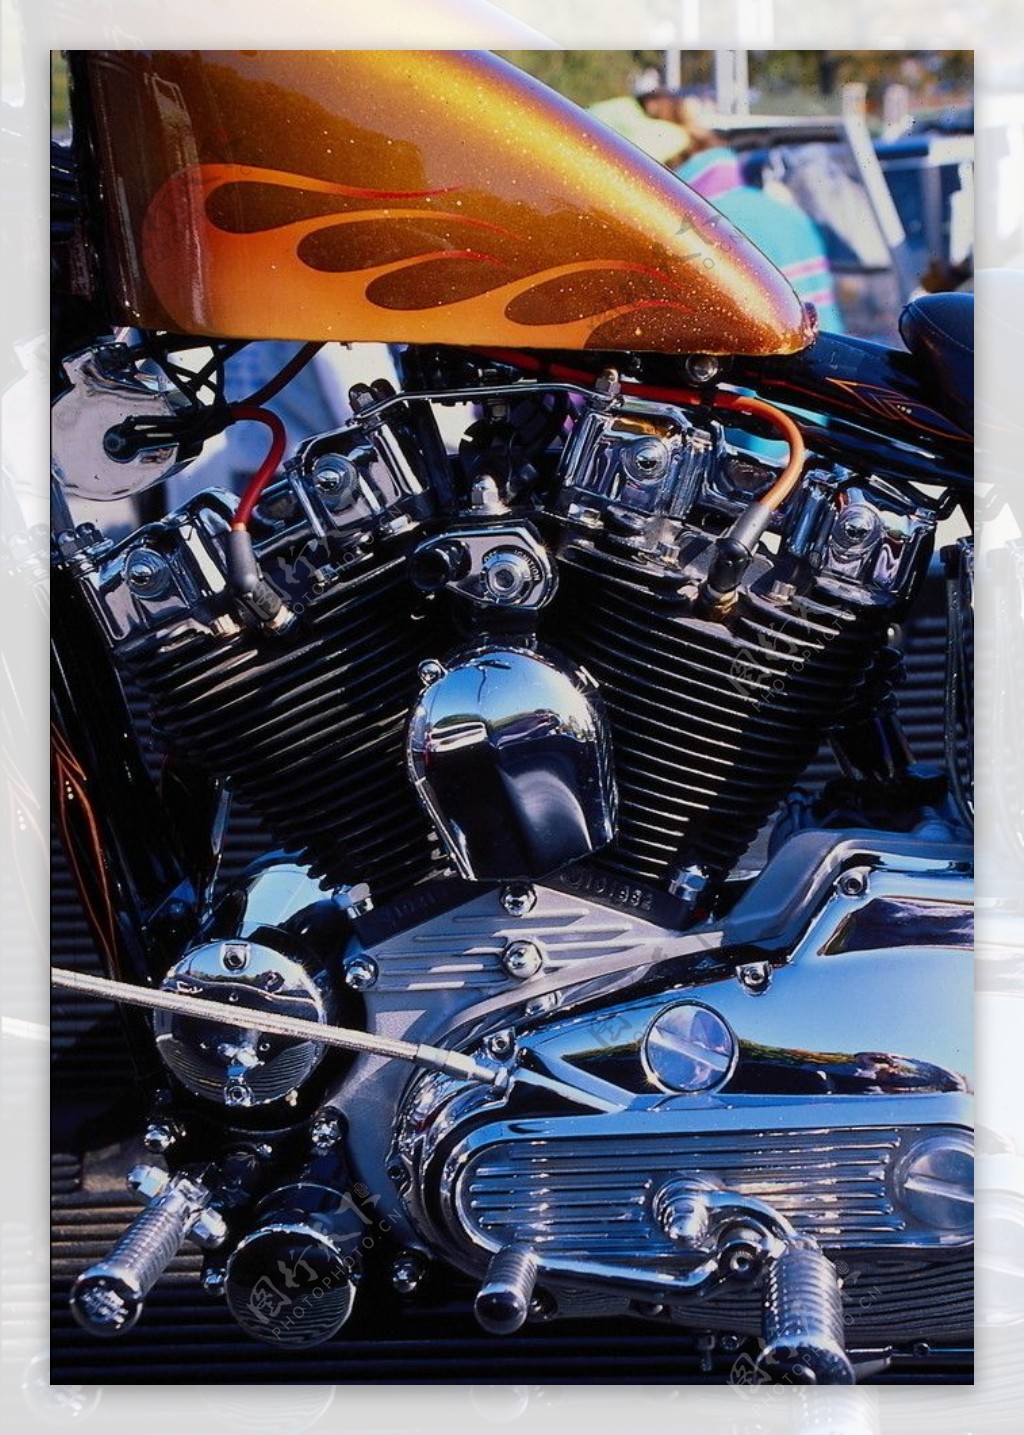 HARLEYDAVIDSON哈雷戴维森老式摩托车图片